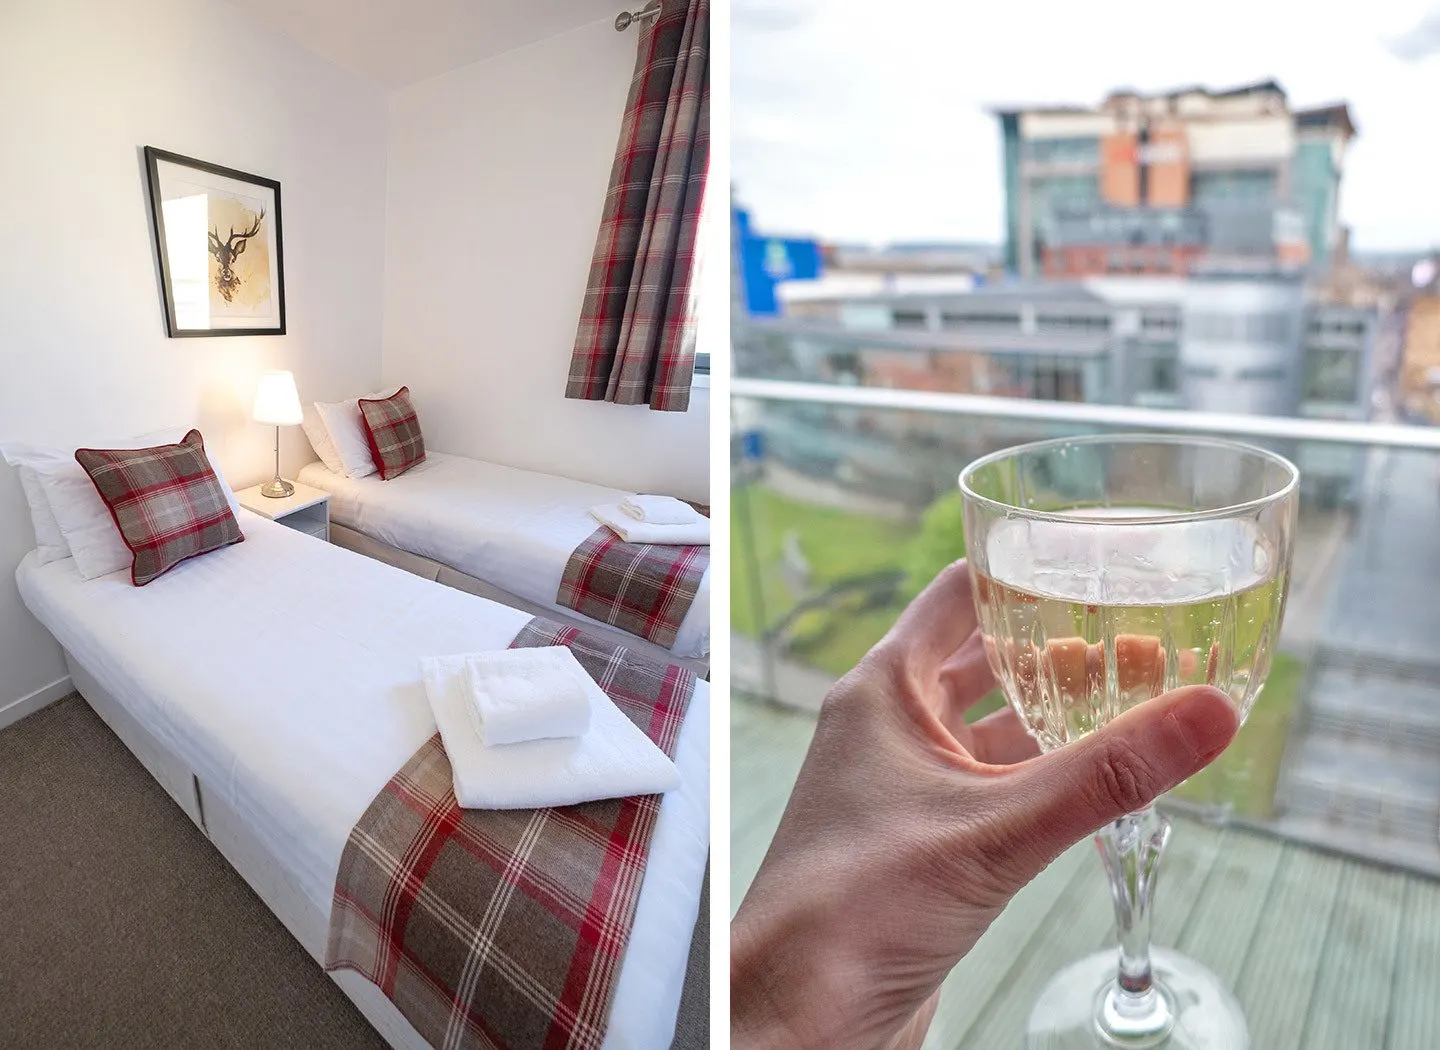 Matrix apartments in Glasgow – bedroom and balcony